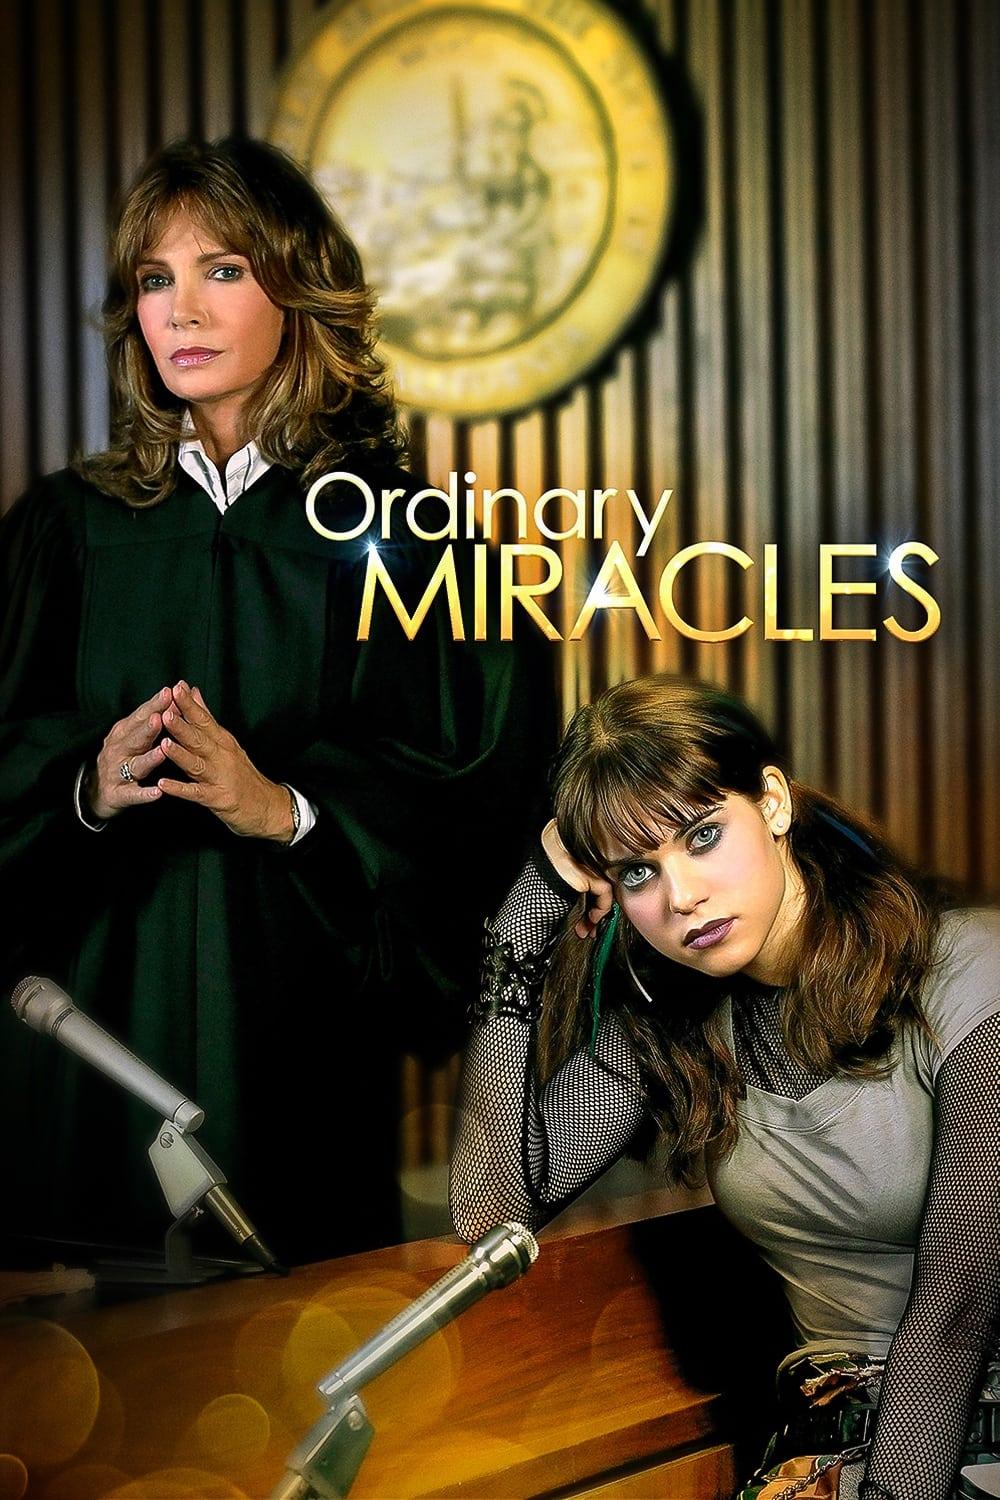 Ordinary Miracles poster